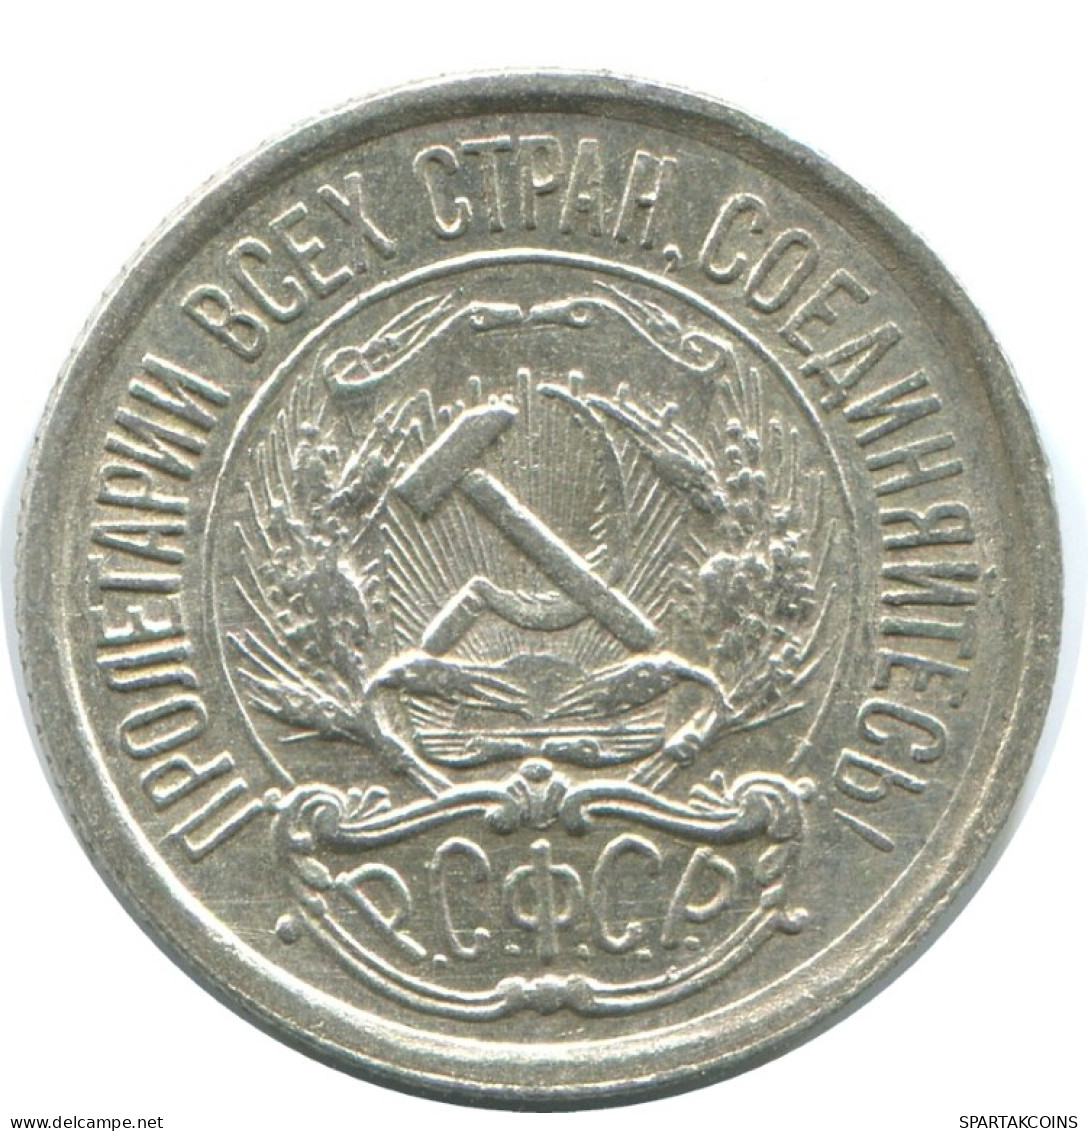 10 KOPEKS 1923 RUSSIA RSFSR SILVER Coin HIGH GRADE #AE977.4.U.A - Russland